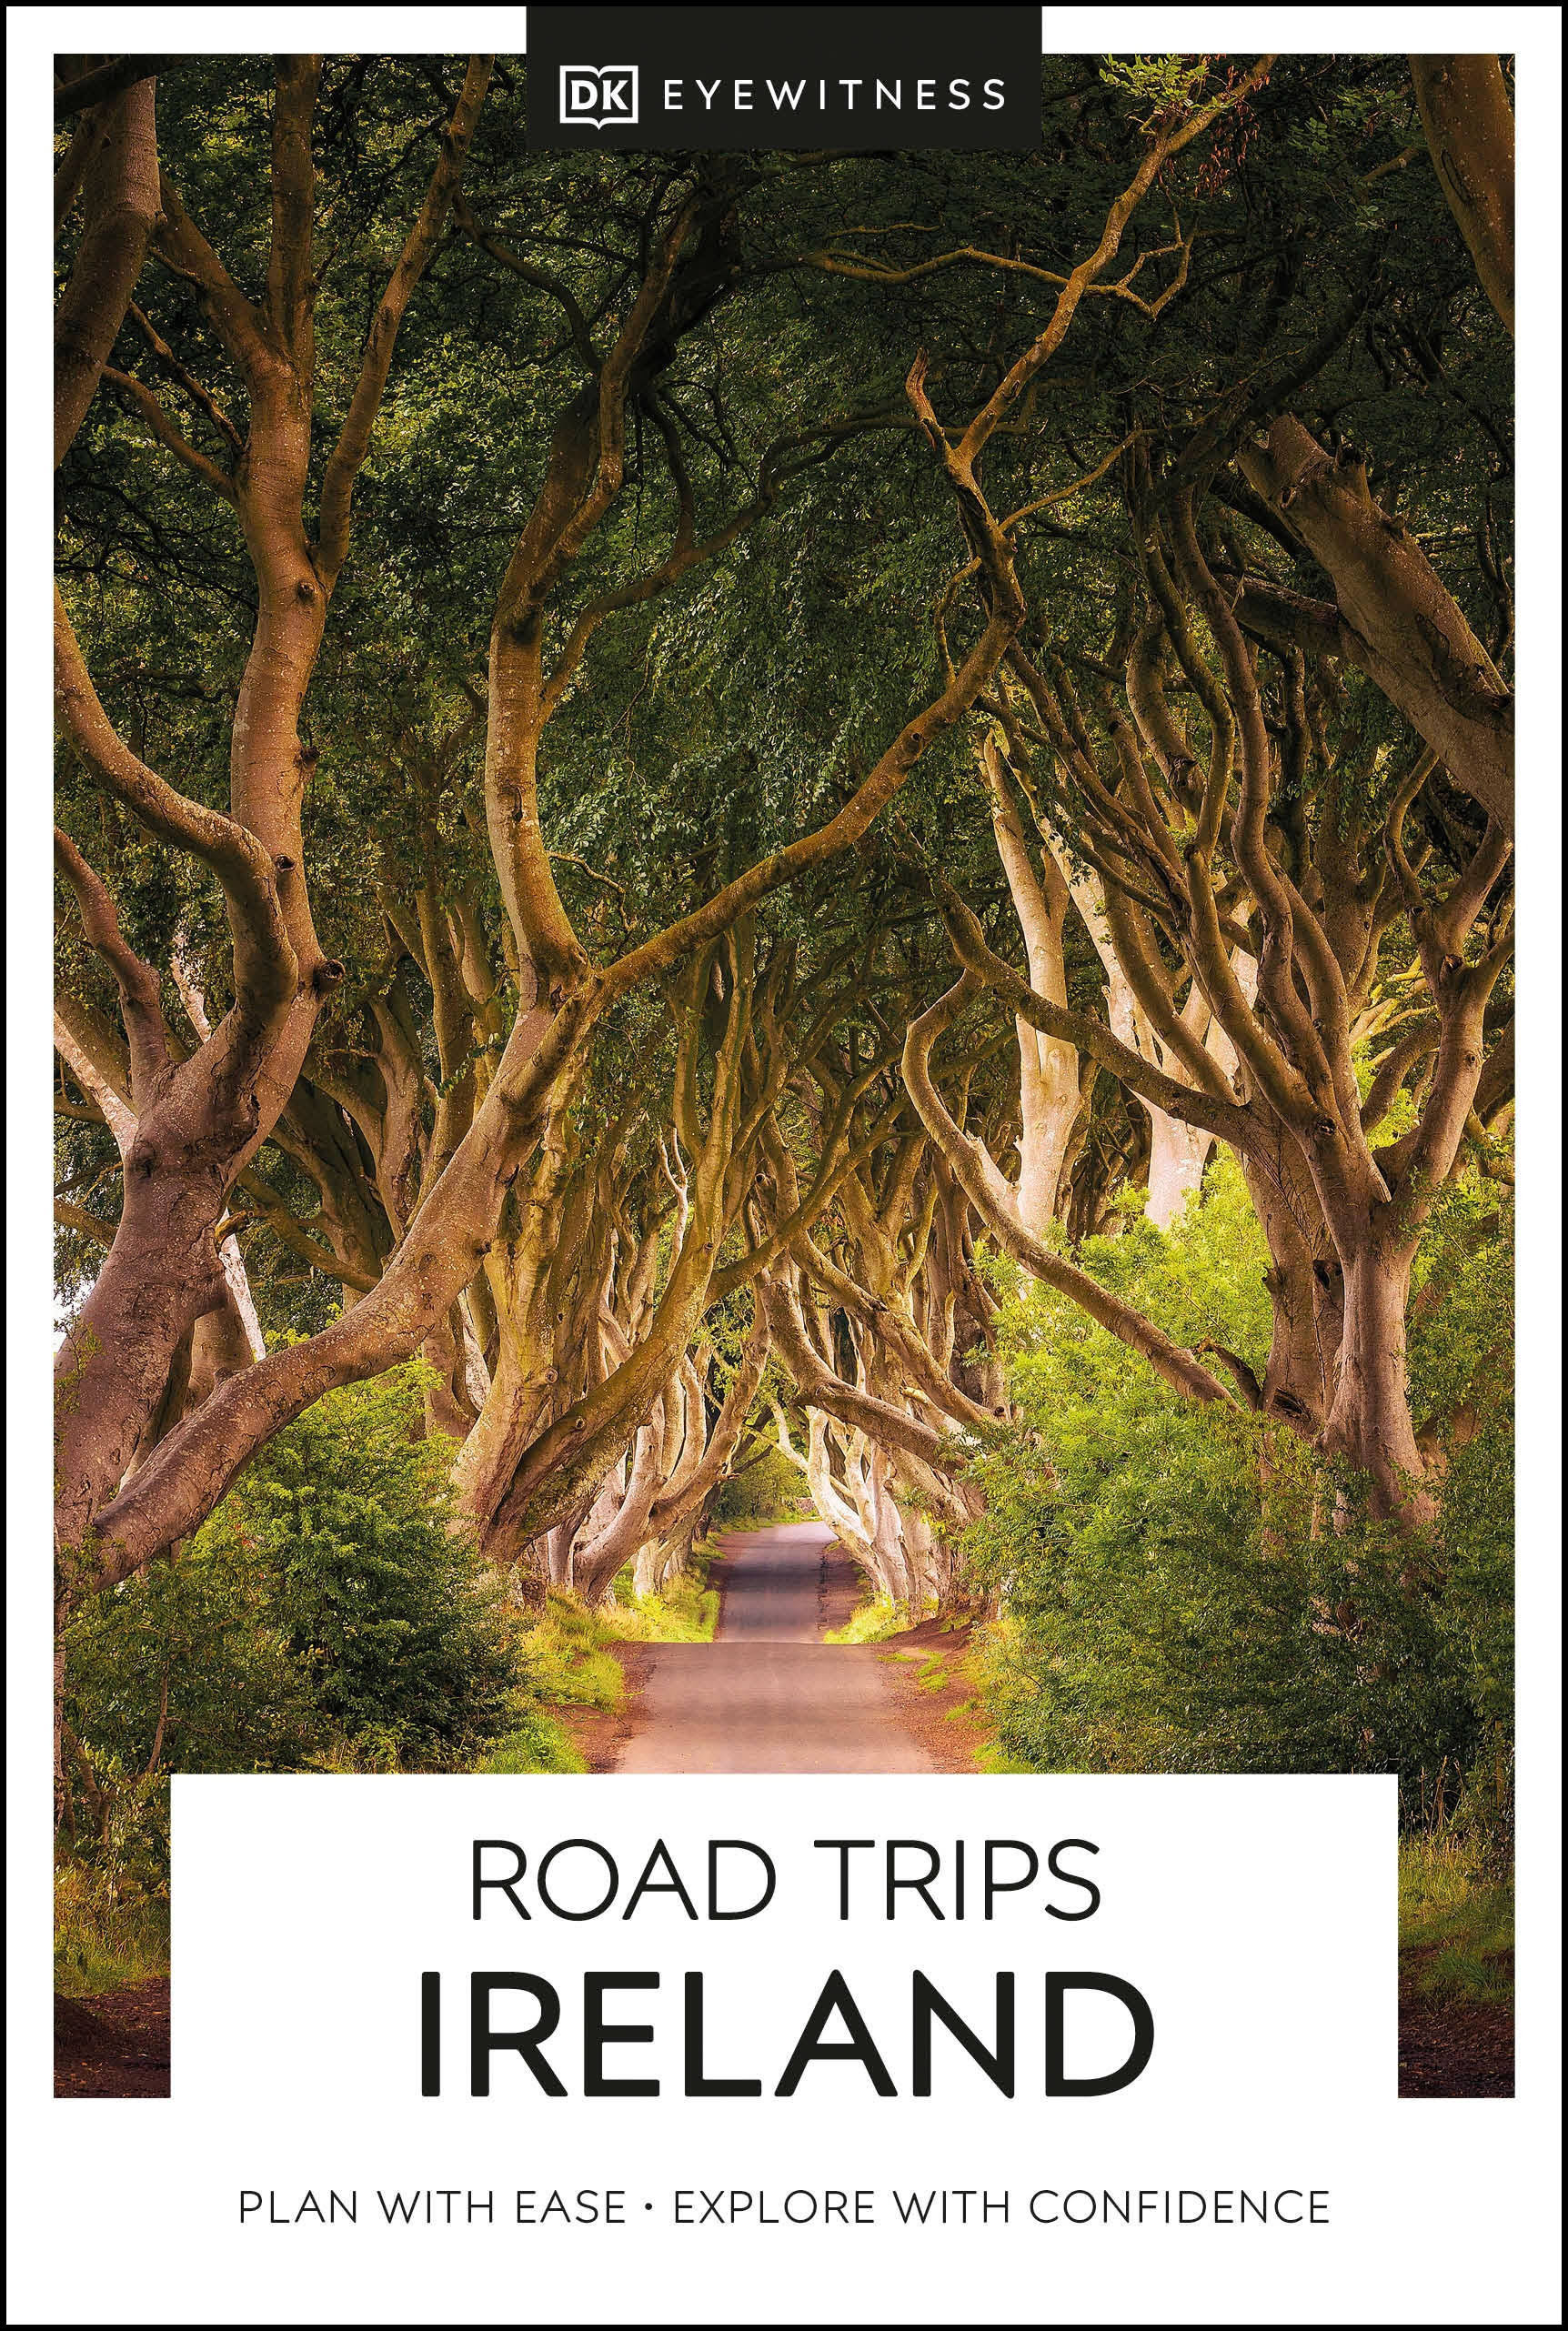 DK Eyewitness Road Trips Ireland [Book]